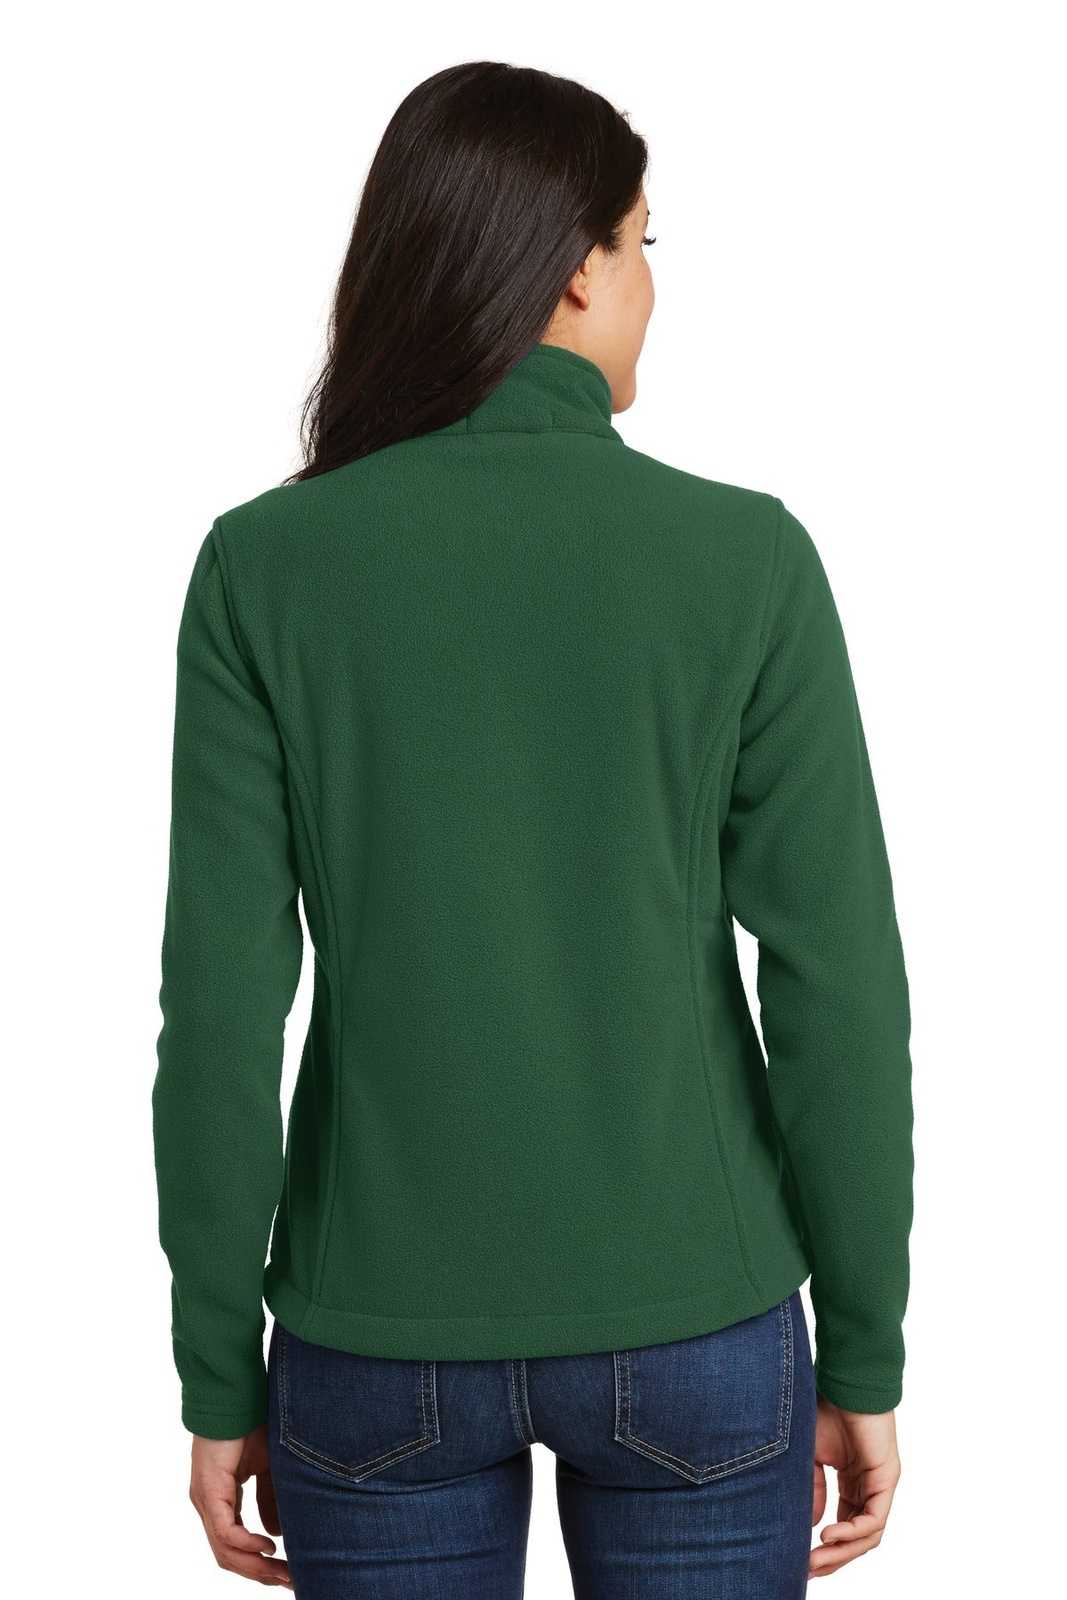 Port Authority L217 Ladies Value Fleece Jacket - Forest Green - HIT a Double - 2